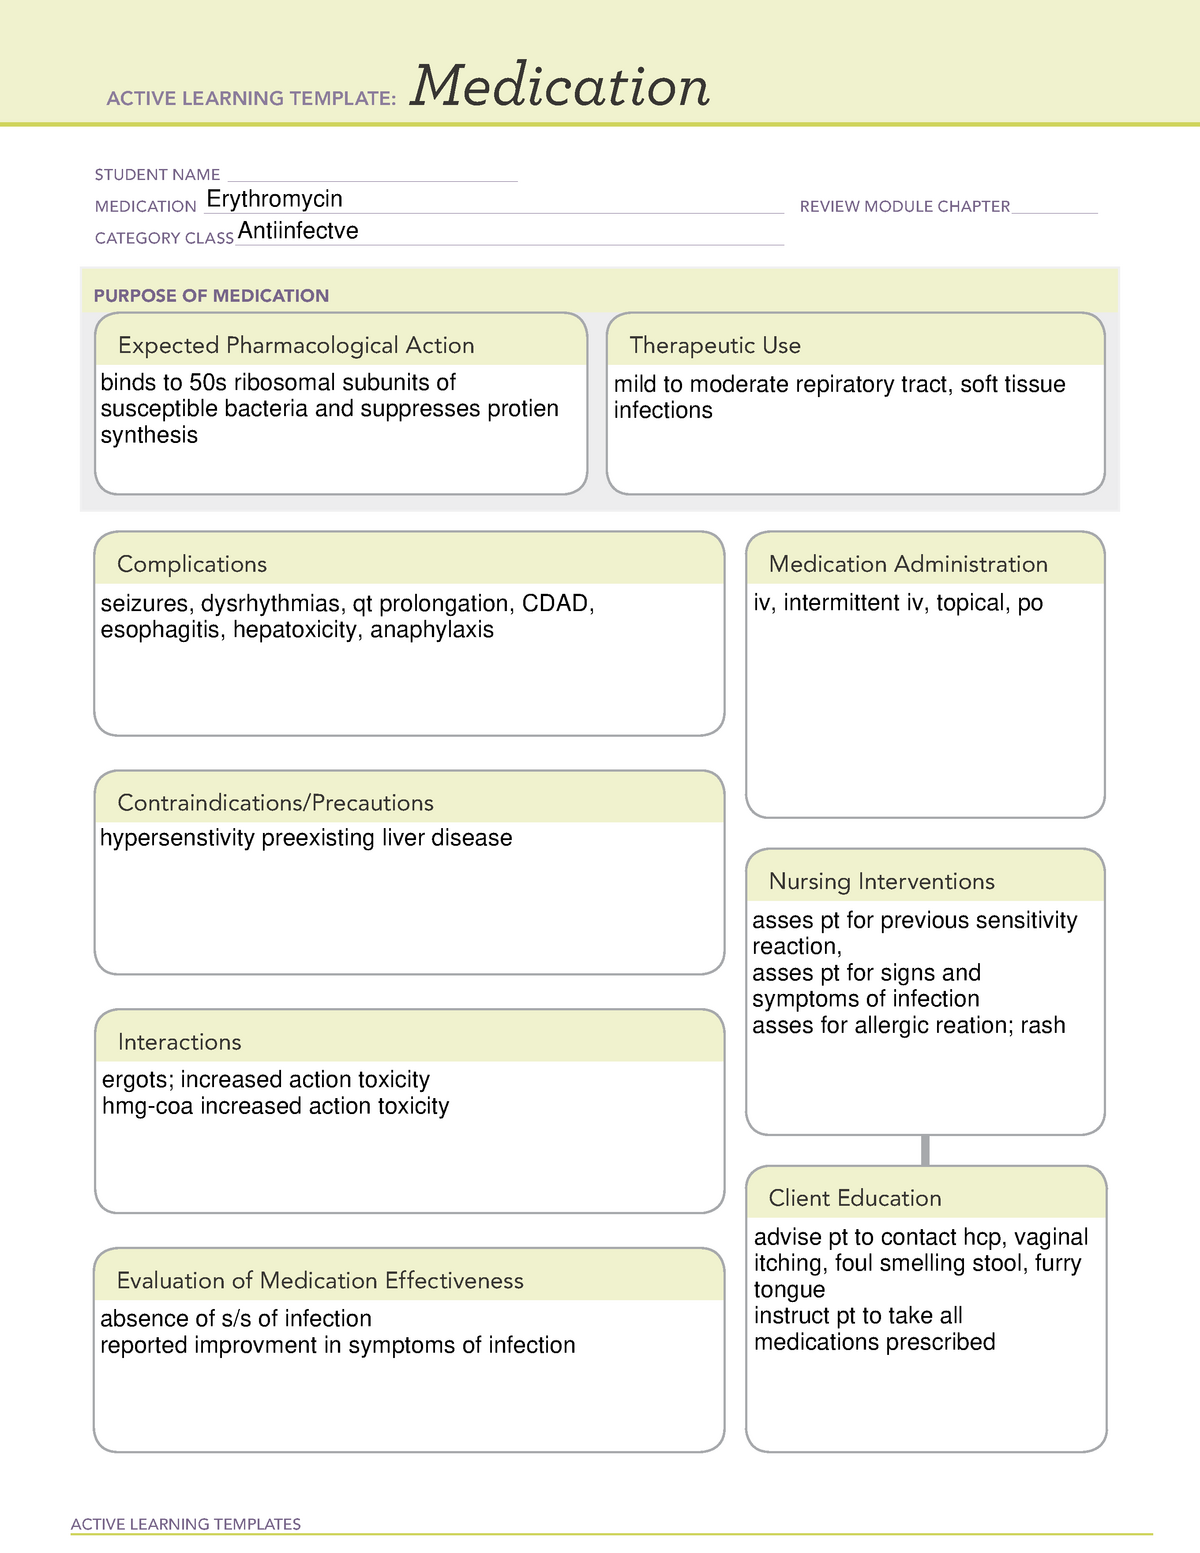 erythromycin-med-cards-active-learning-templates-medication-student